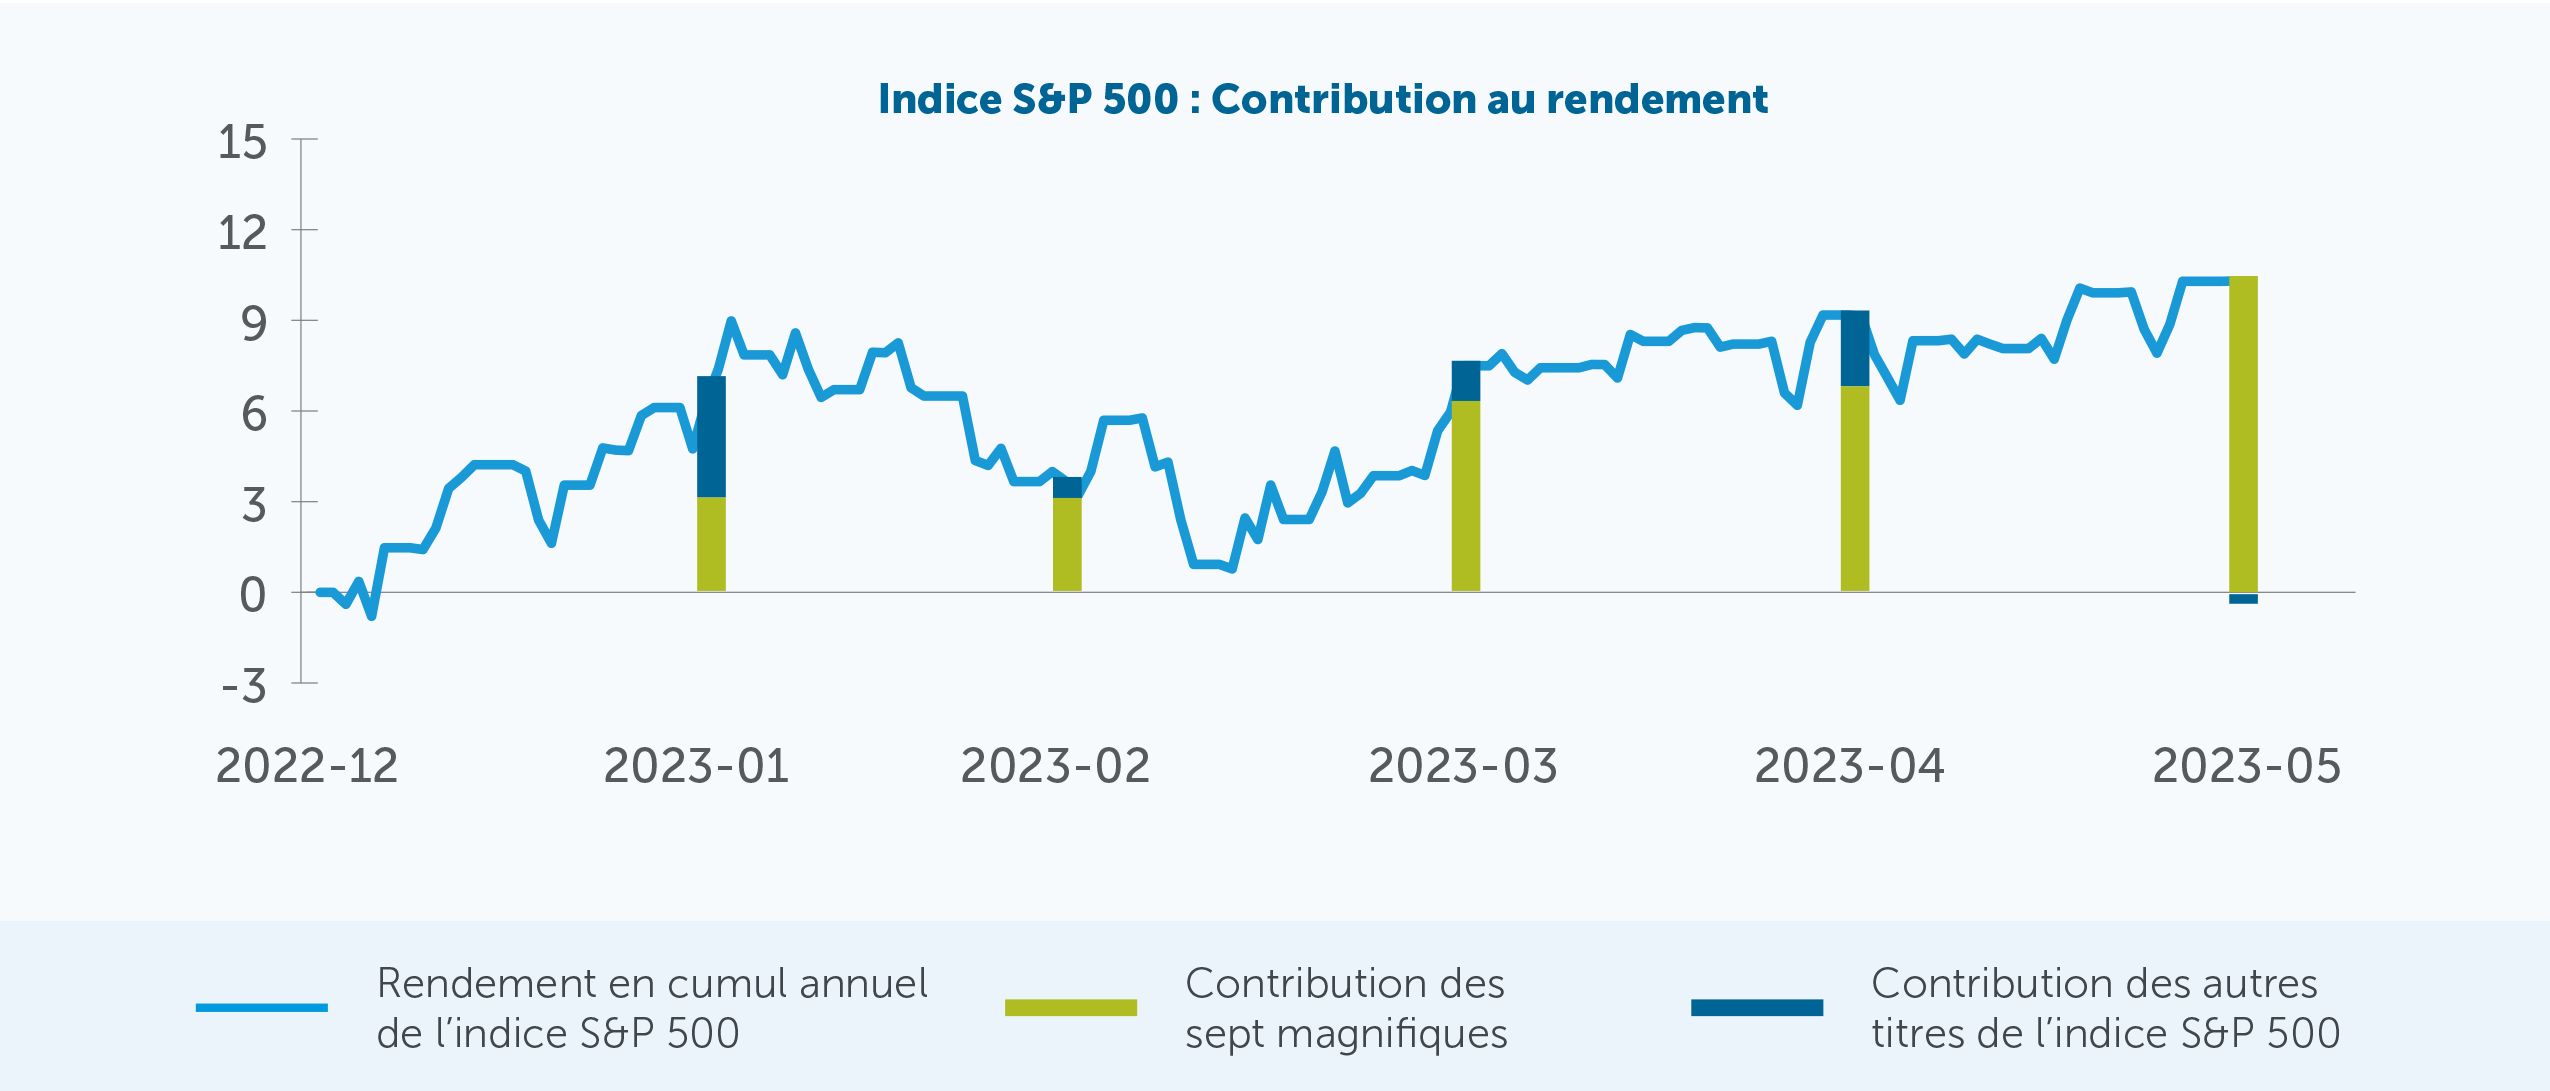 Indice S&P 500 : Contribution au rendement